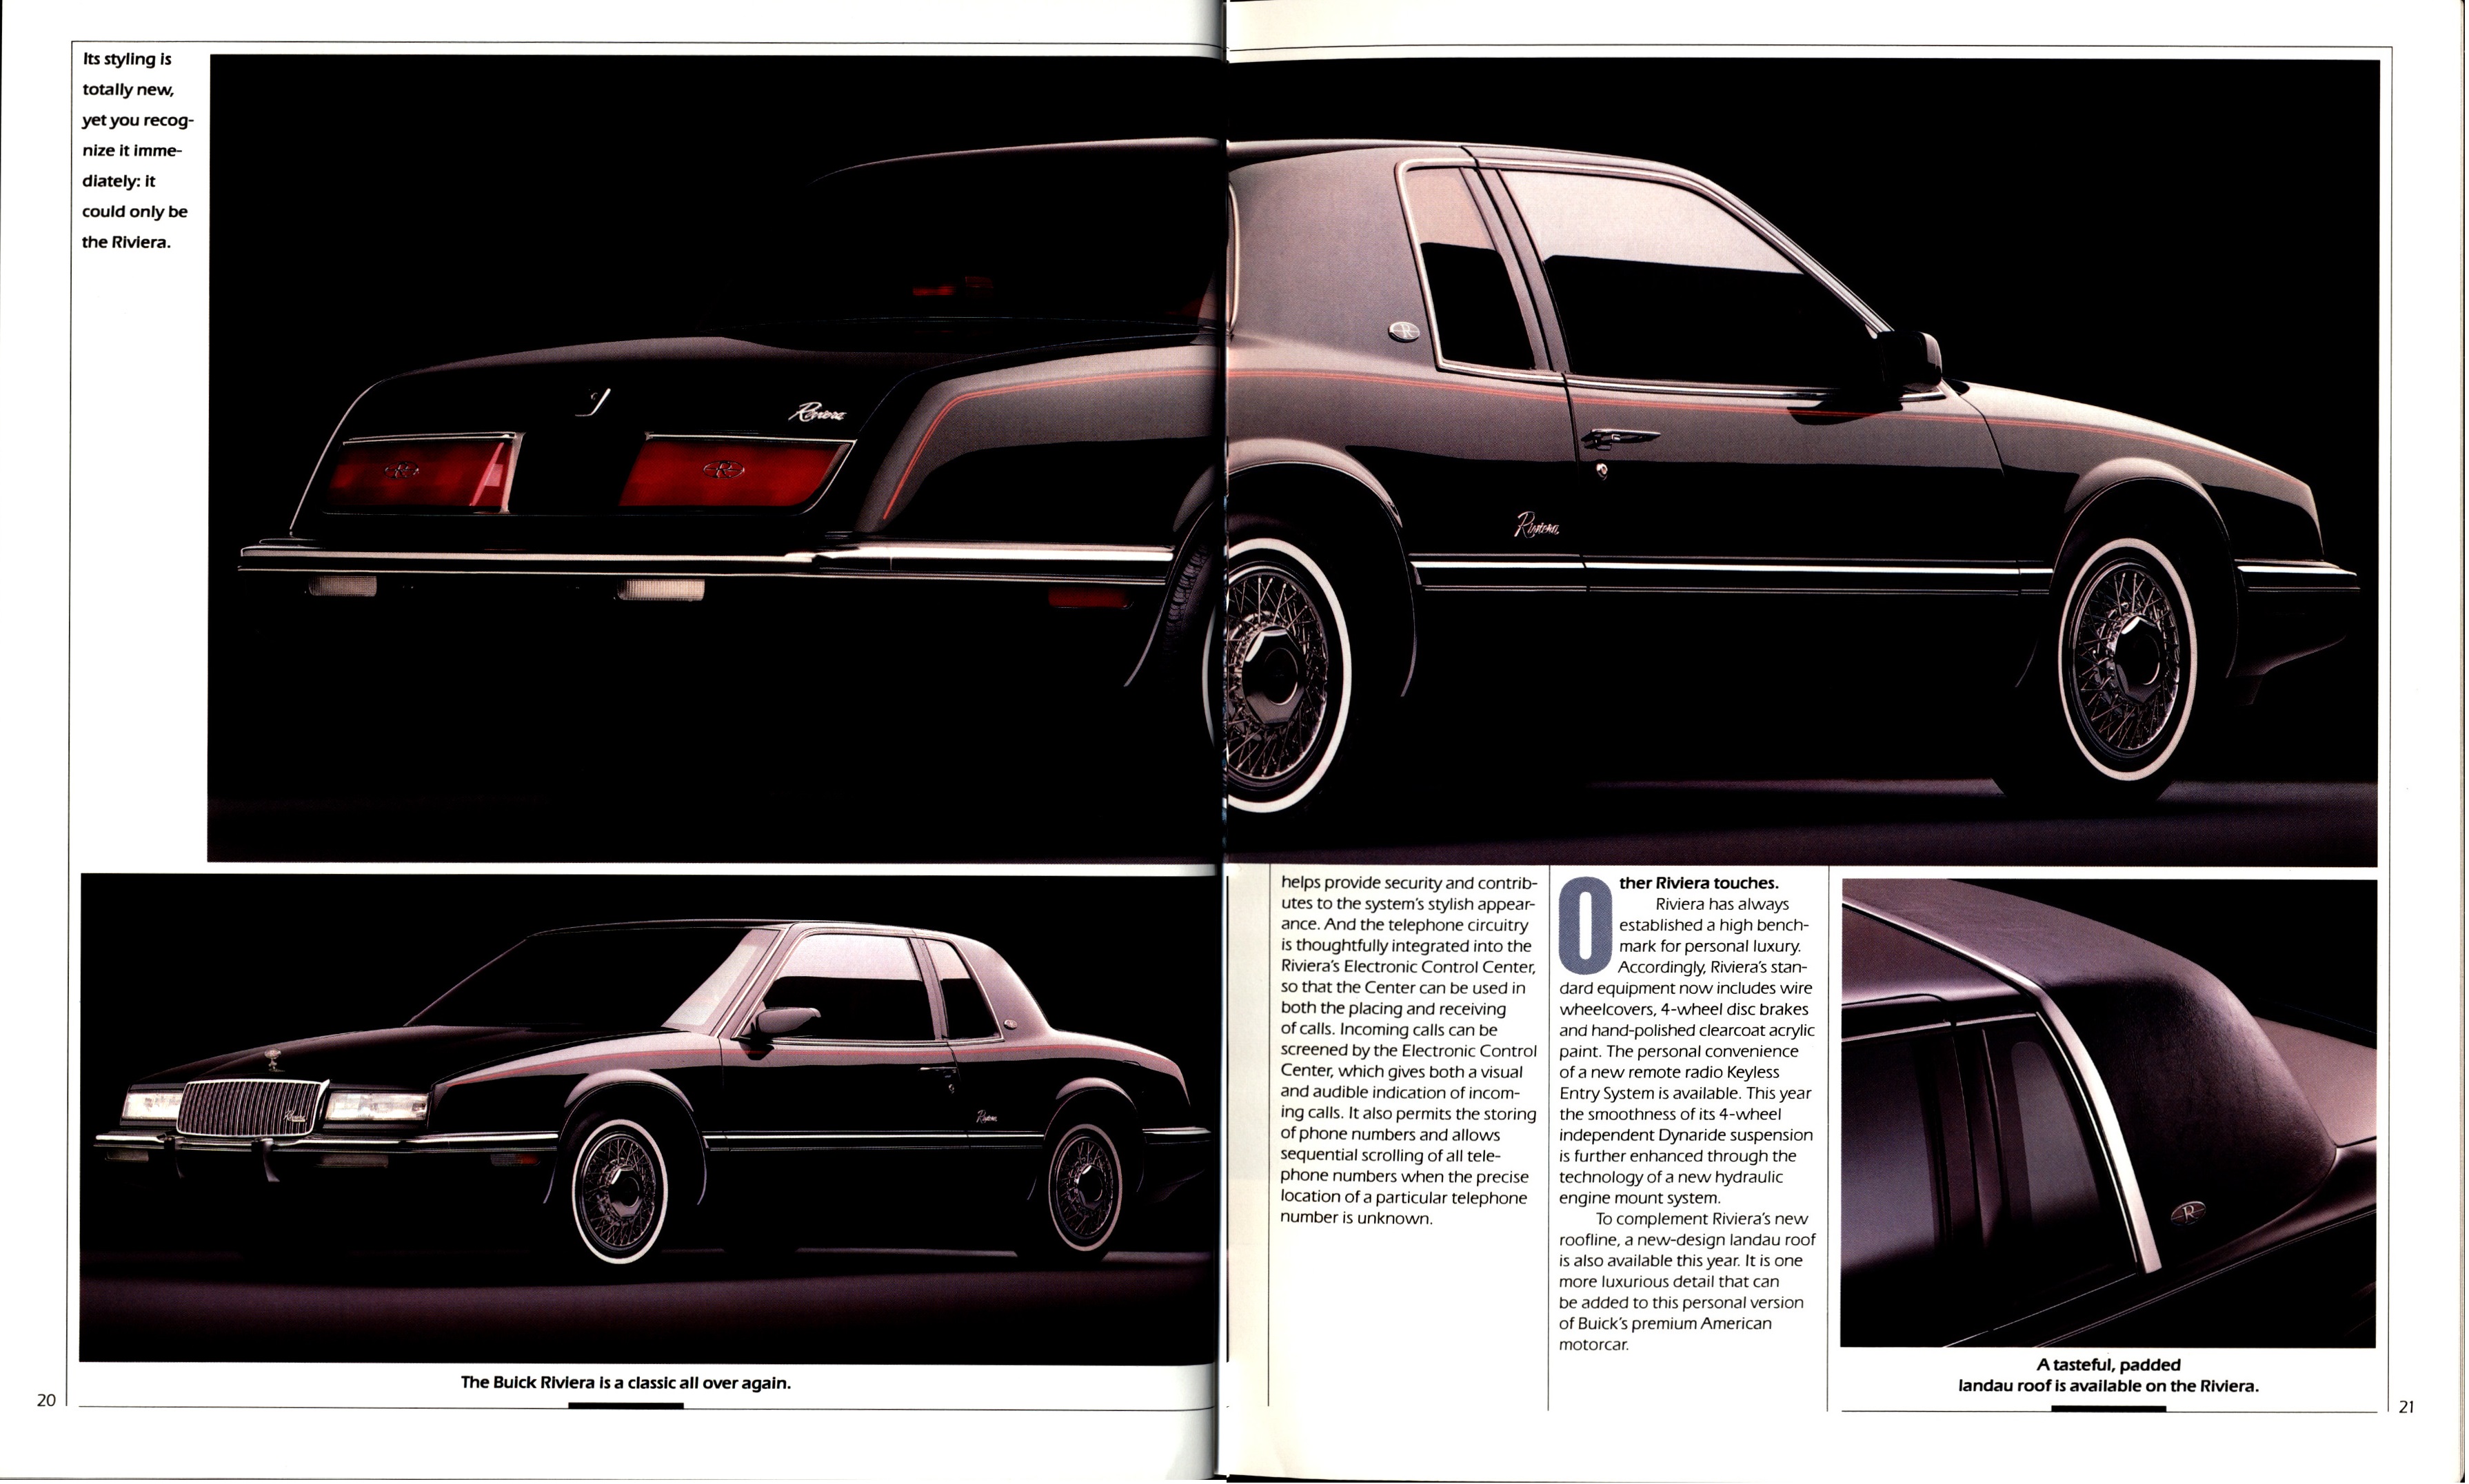 1989 Buick Full Line Prestige  Brochure 20-21